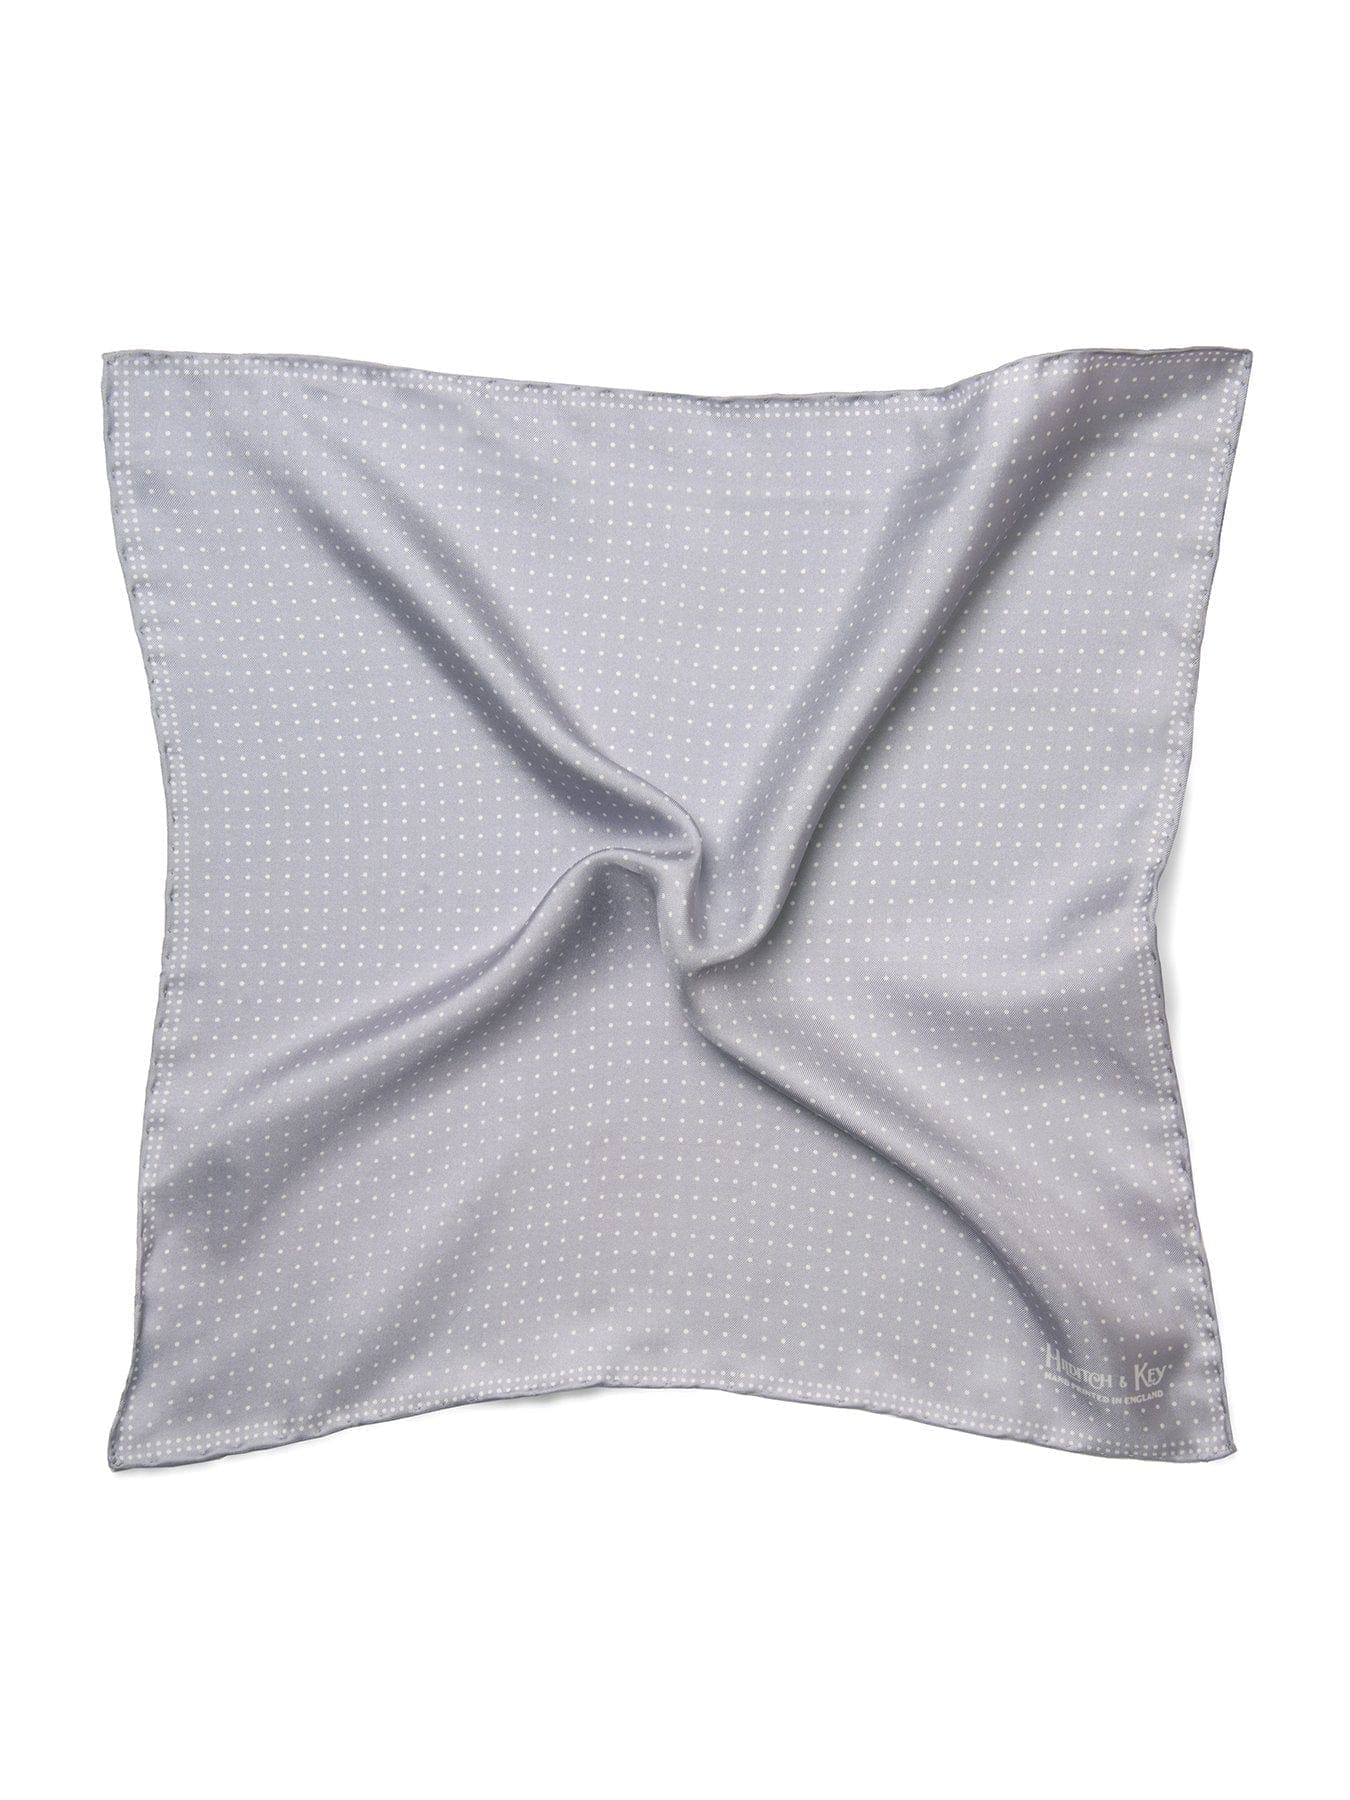 Grey Silk Handkerchief with White Spots